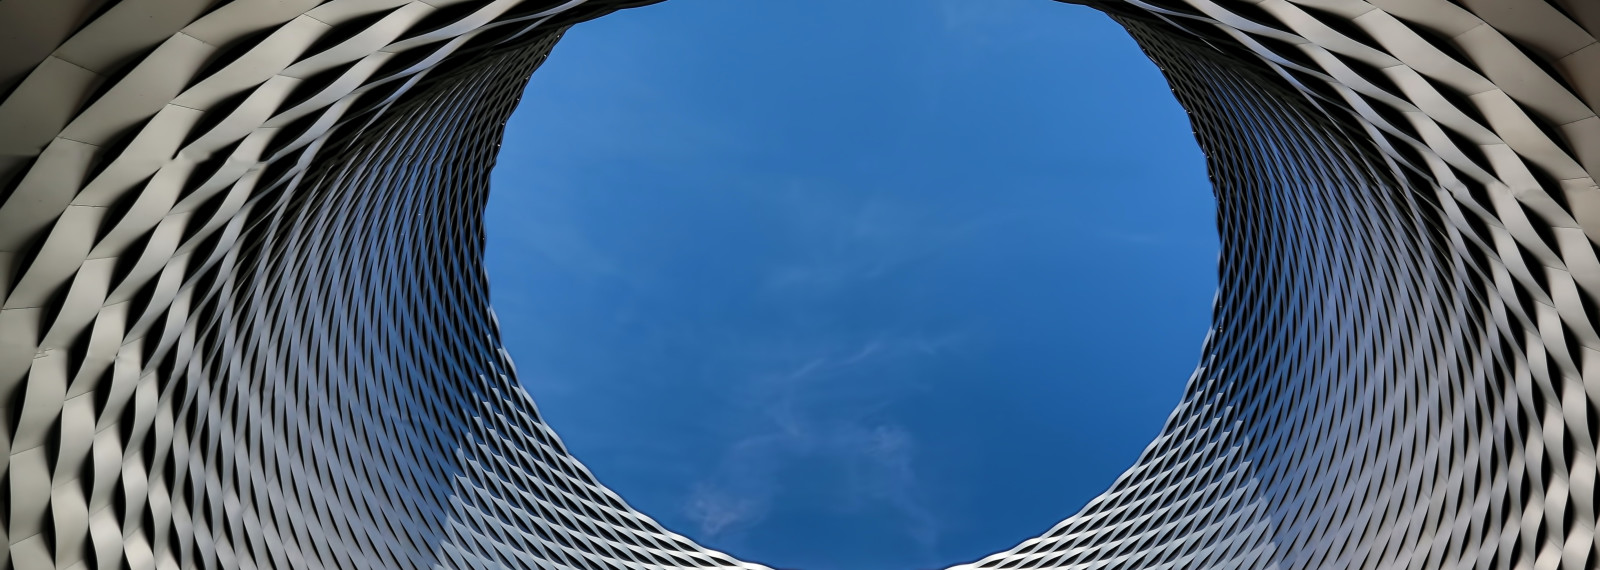 futuristic circular architectural structure